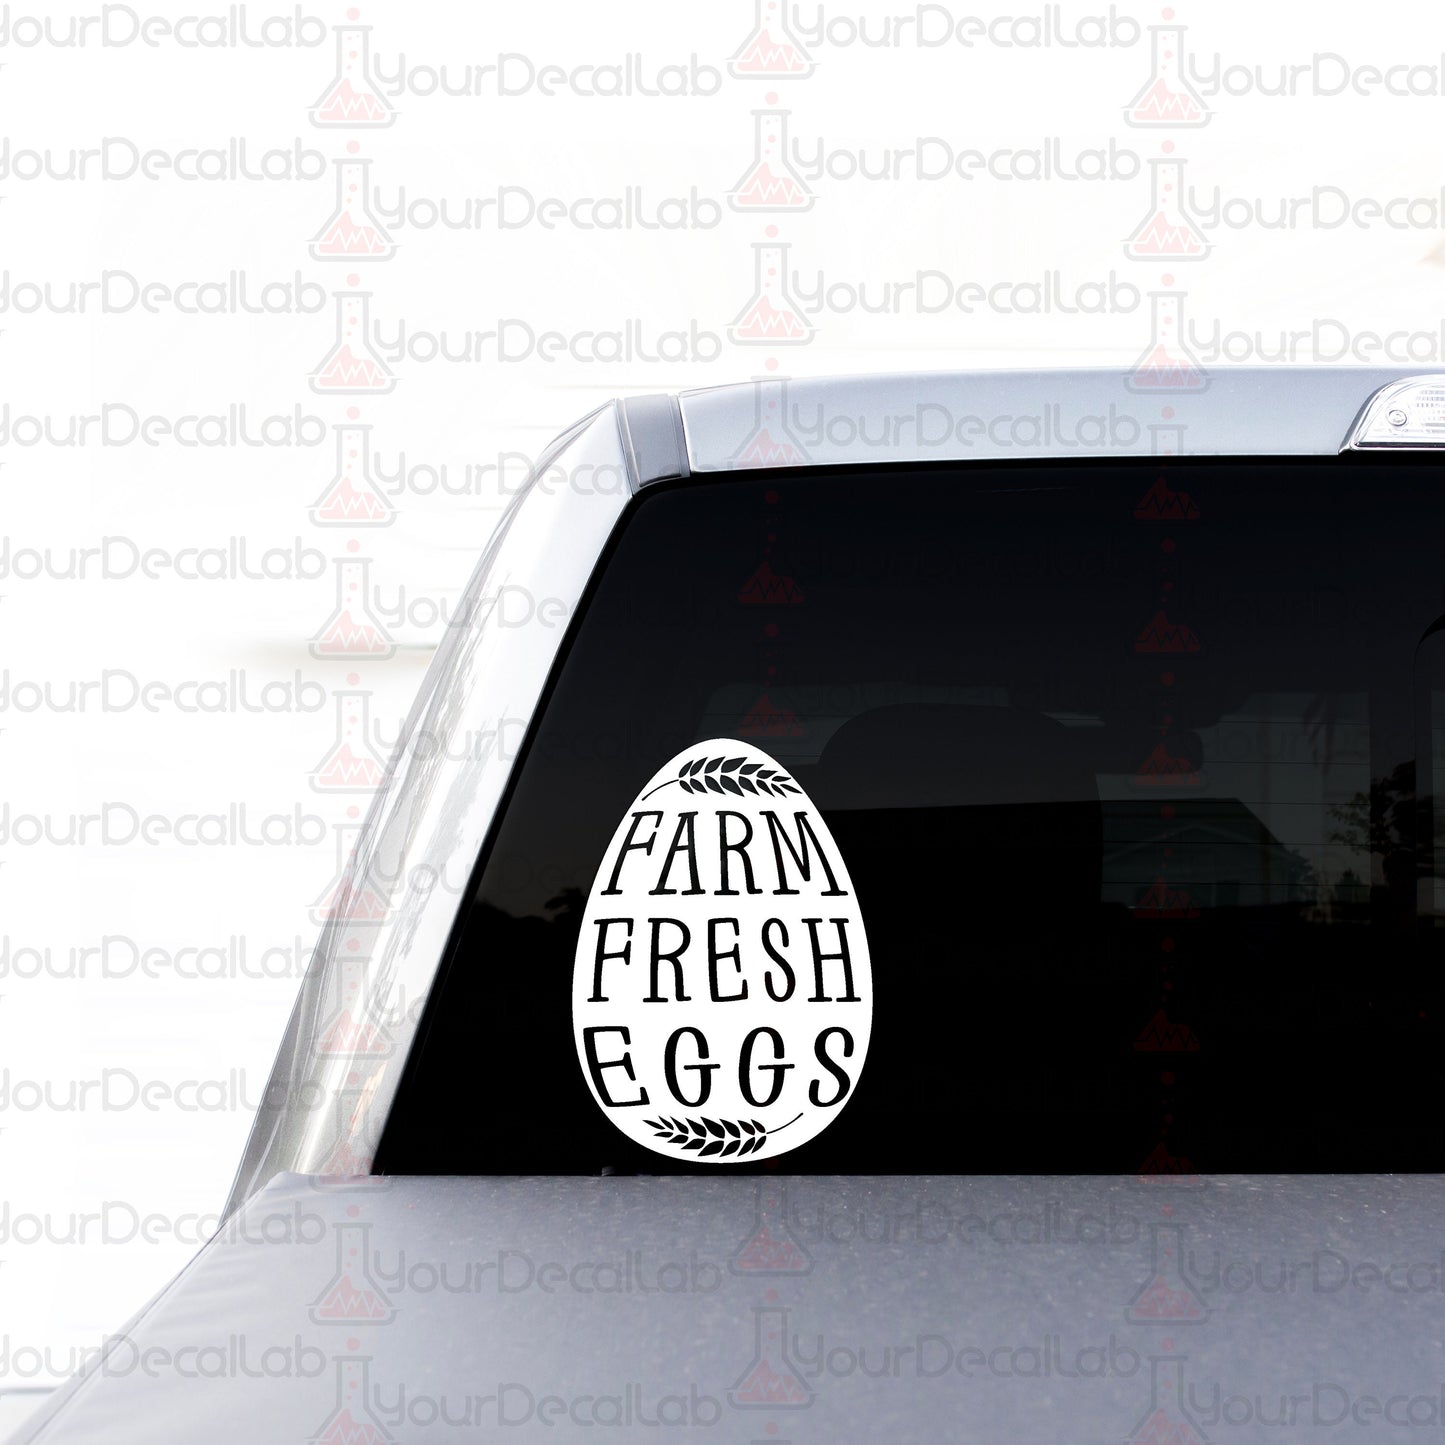 a sticker on the back of a car that says farm fresh eggs